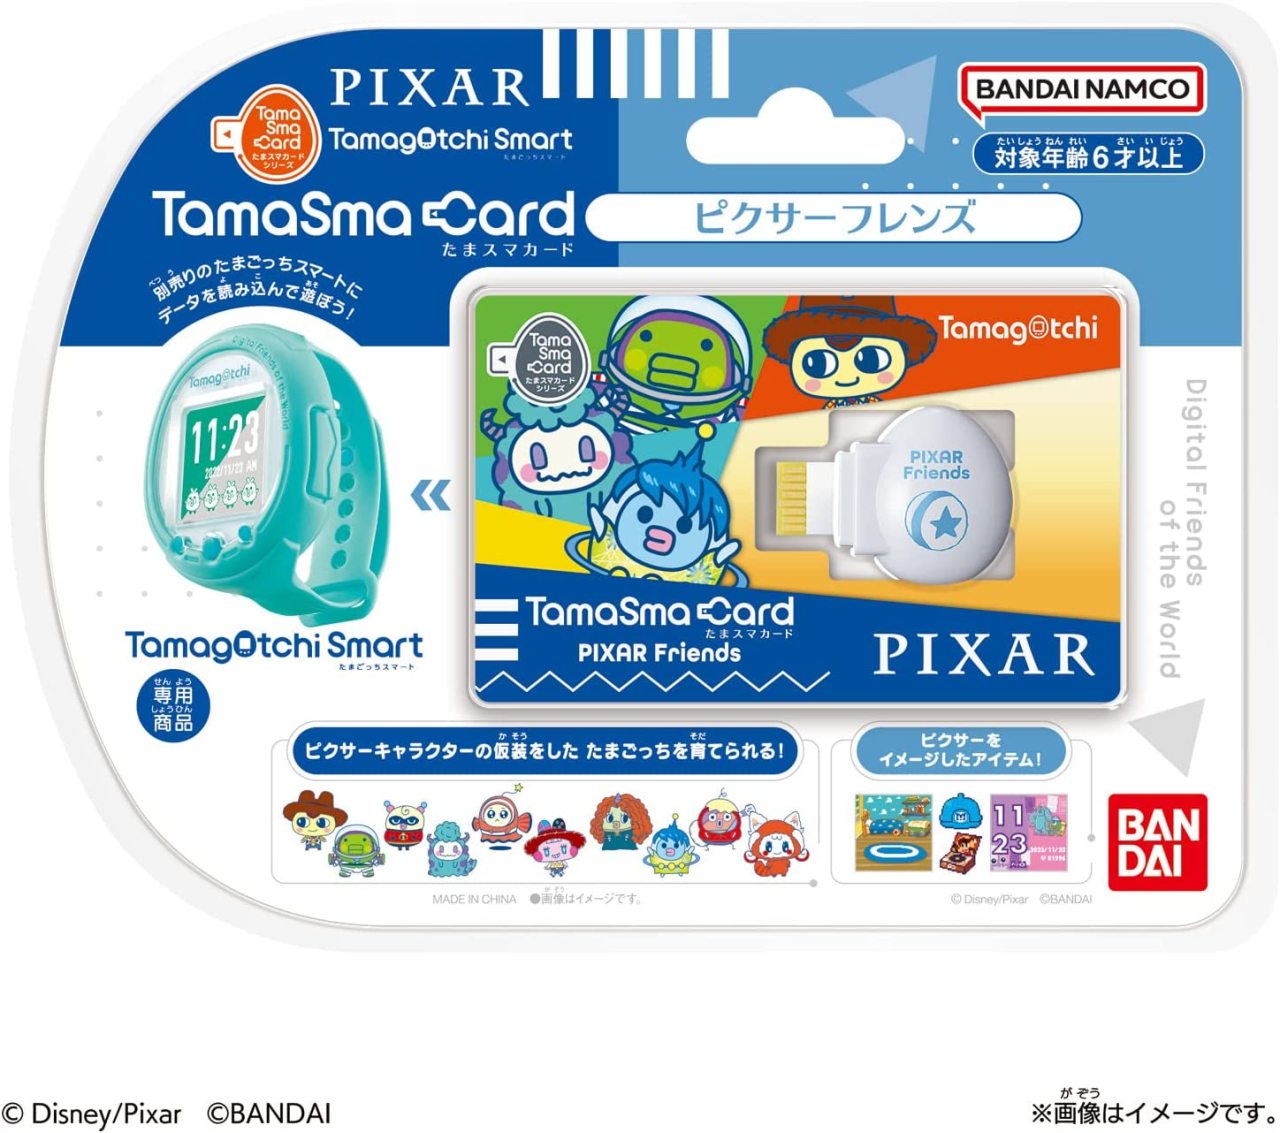 Tama-Palace — Amazon Japan Lists Tamagotchi Smart Pixar Friends